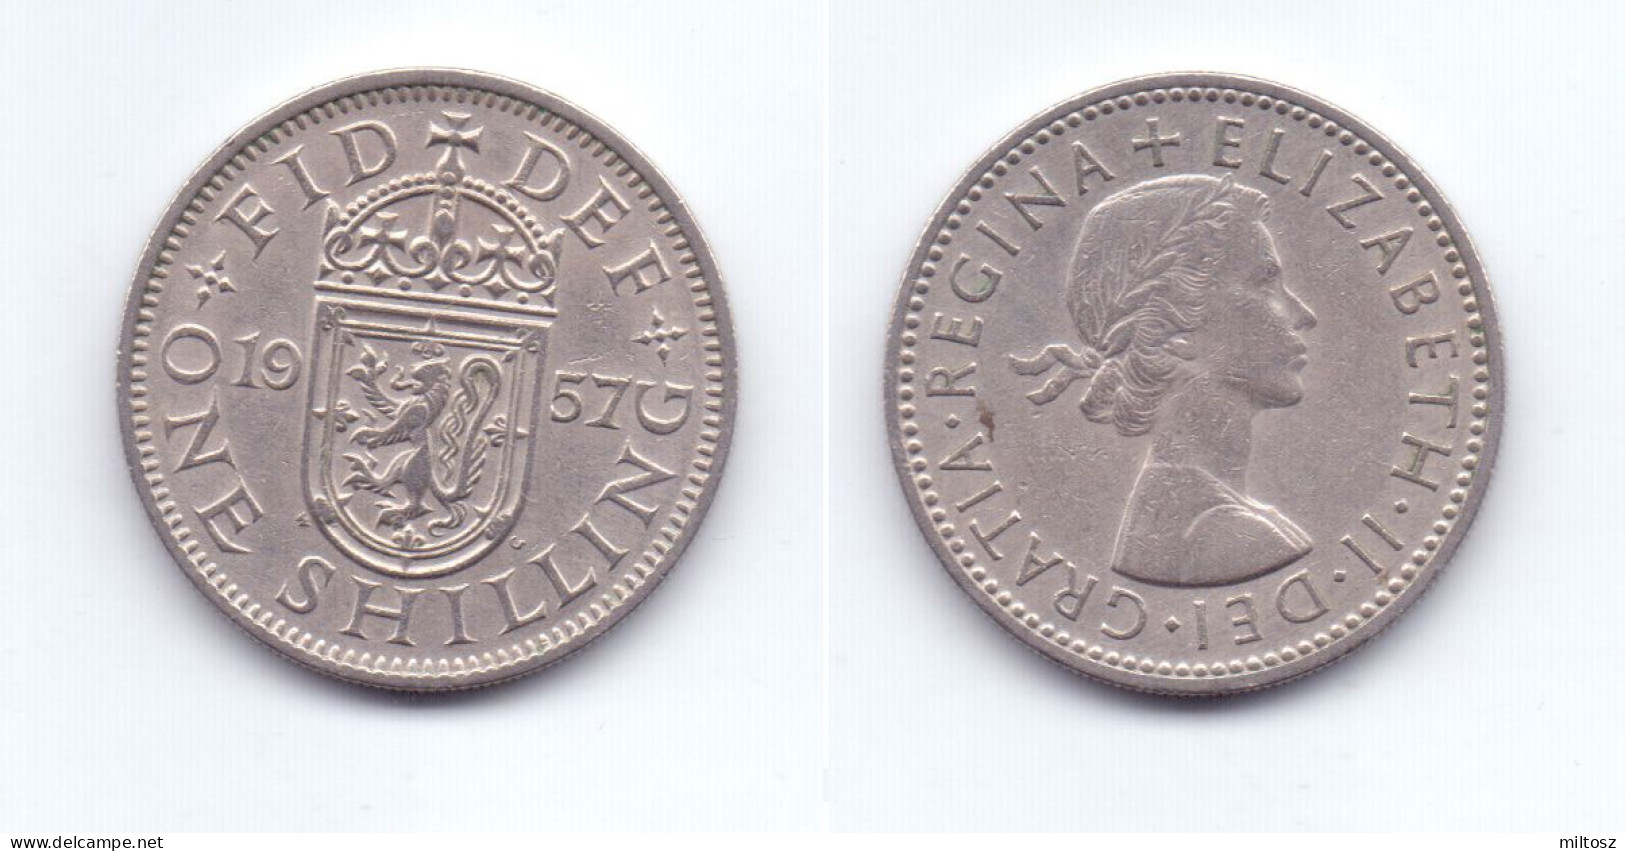 Great Britain 1 Shilling 1957 Scottish Crest - I. 1 Shilling